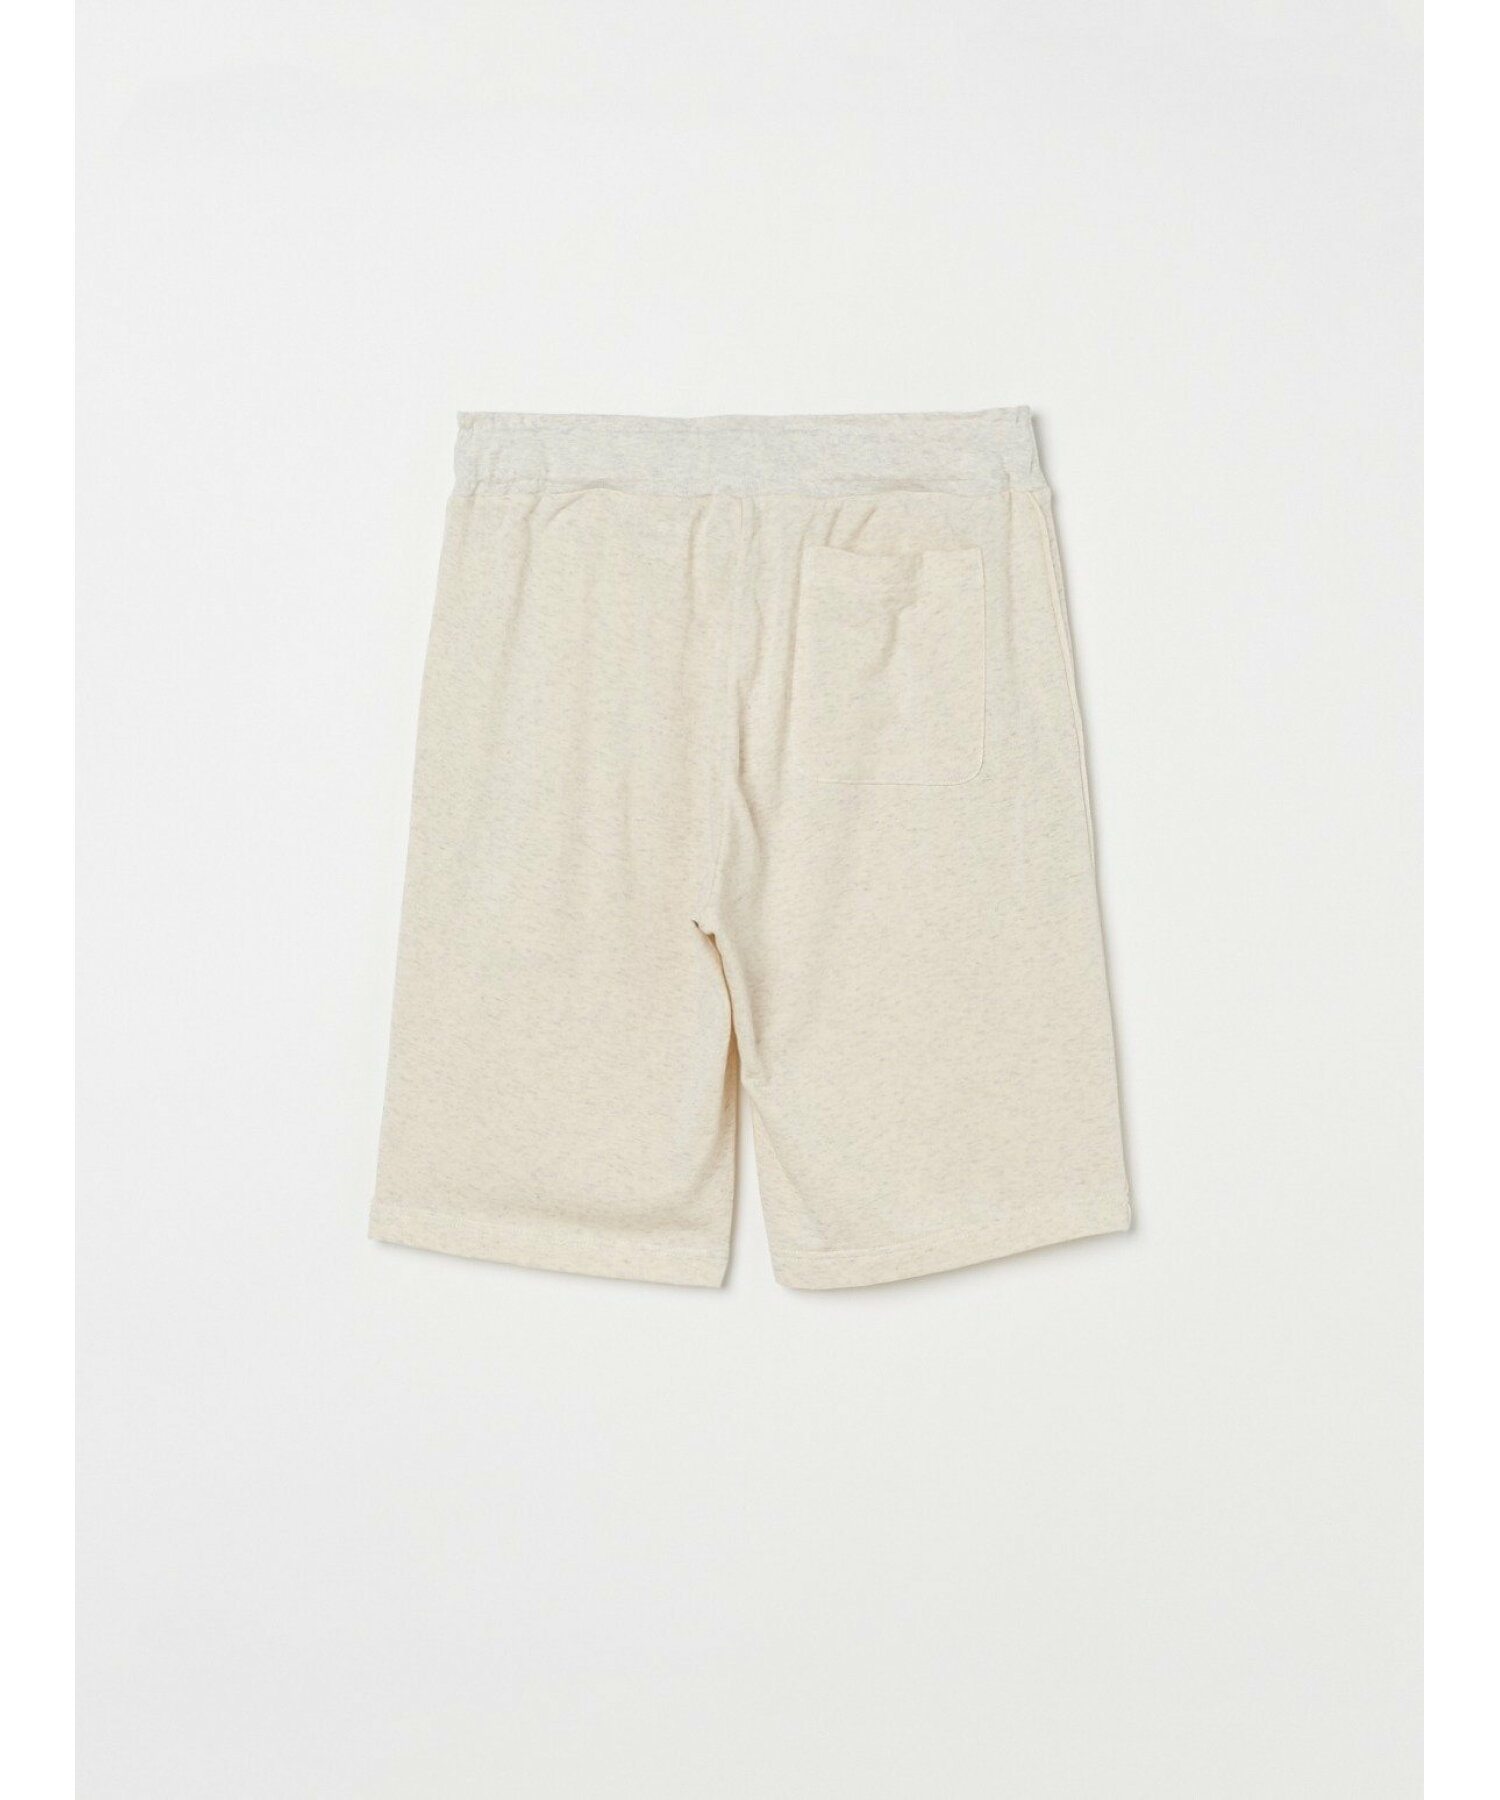 Men's gauze french terry shorts